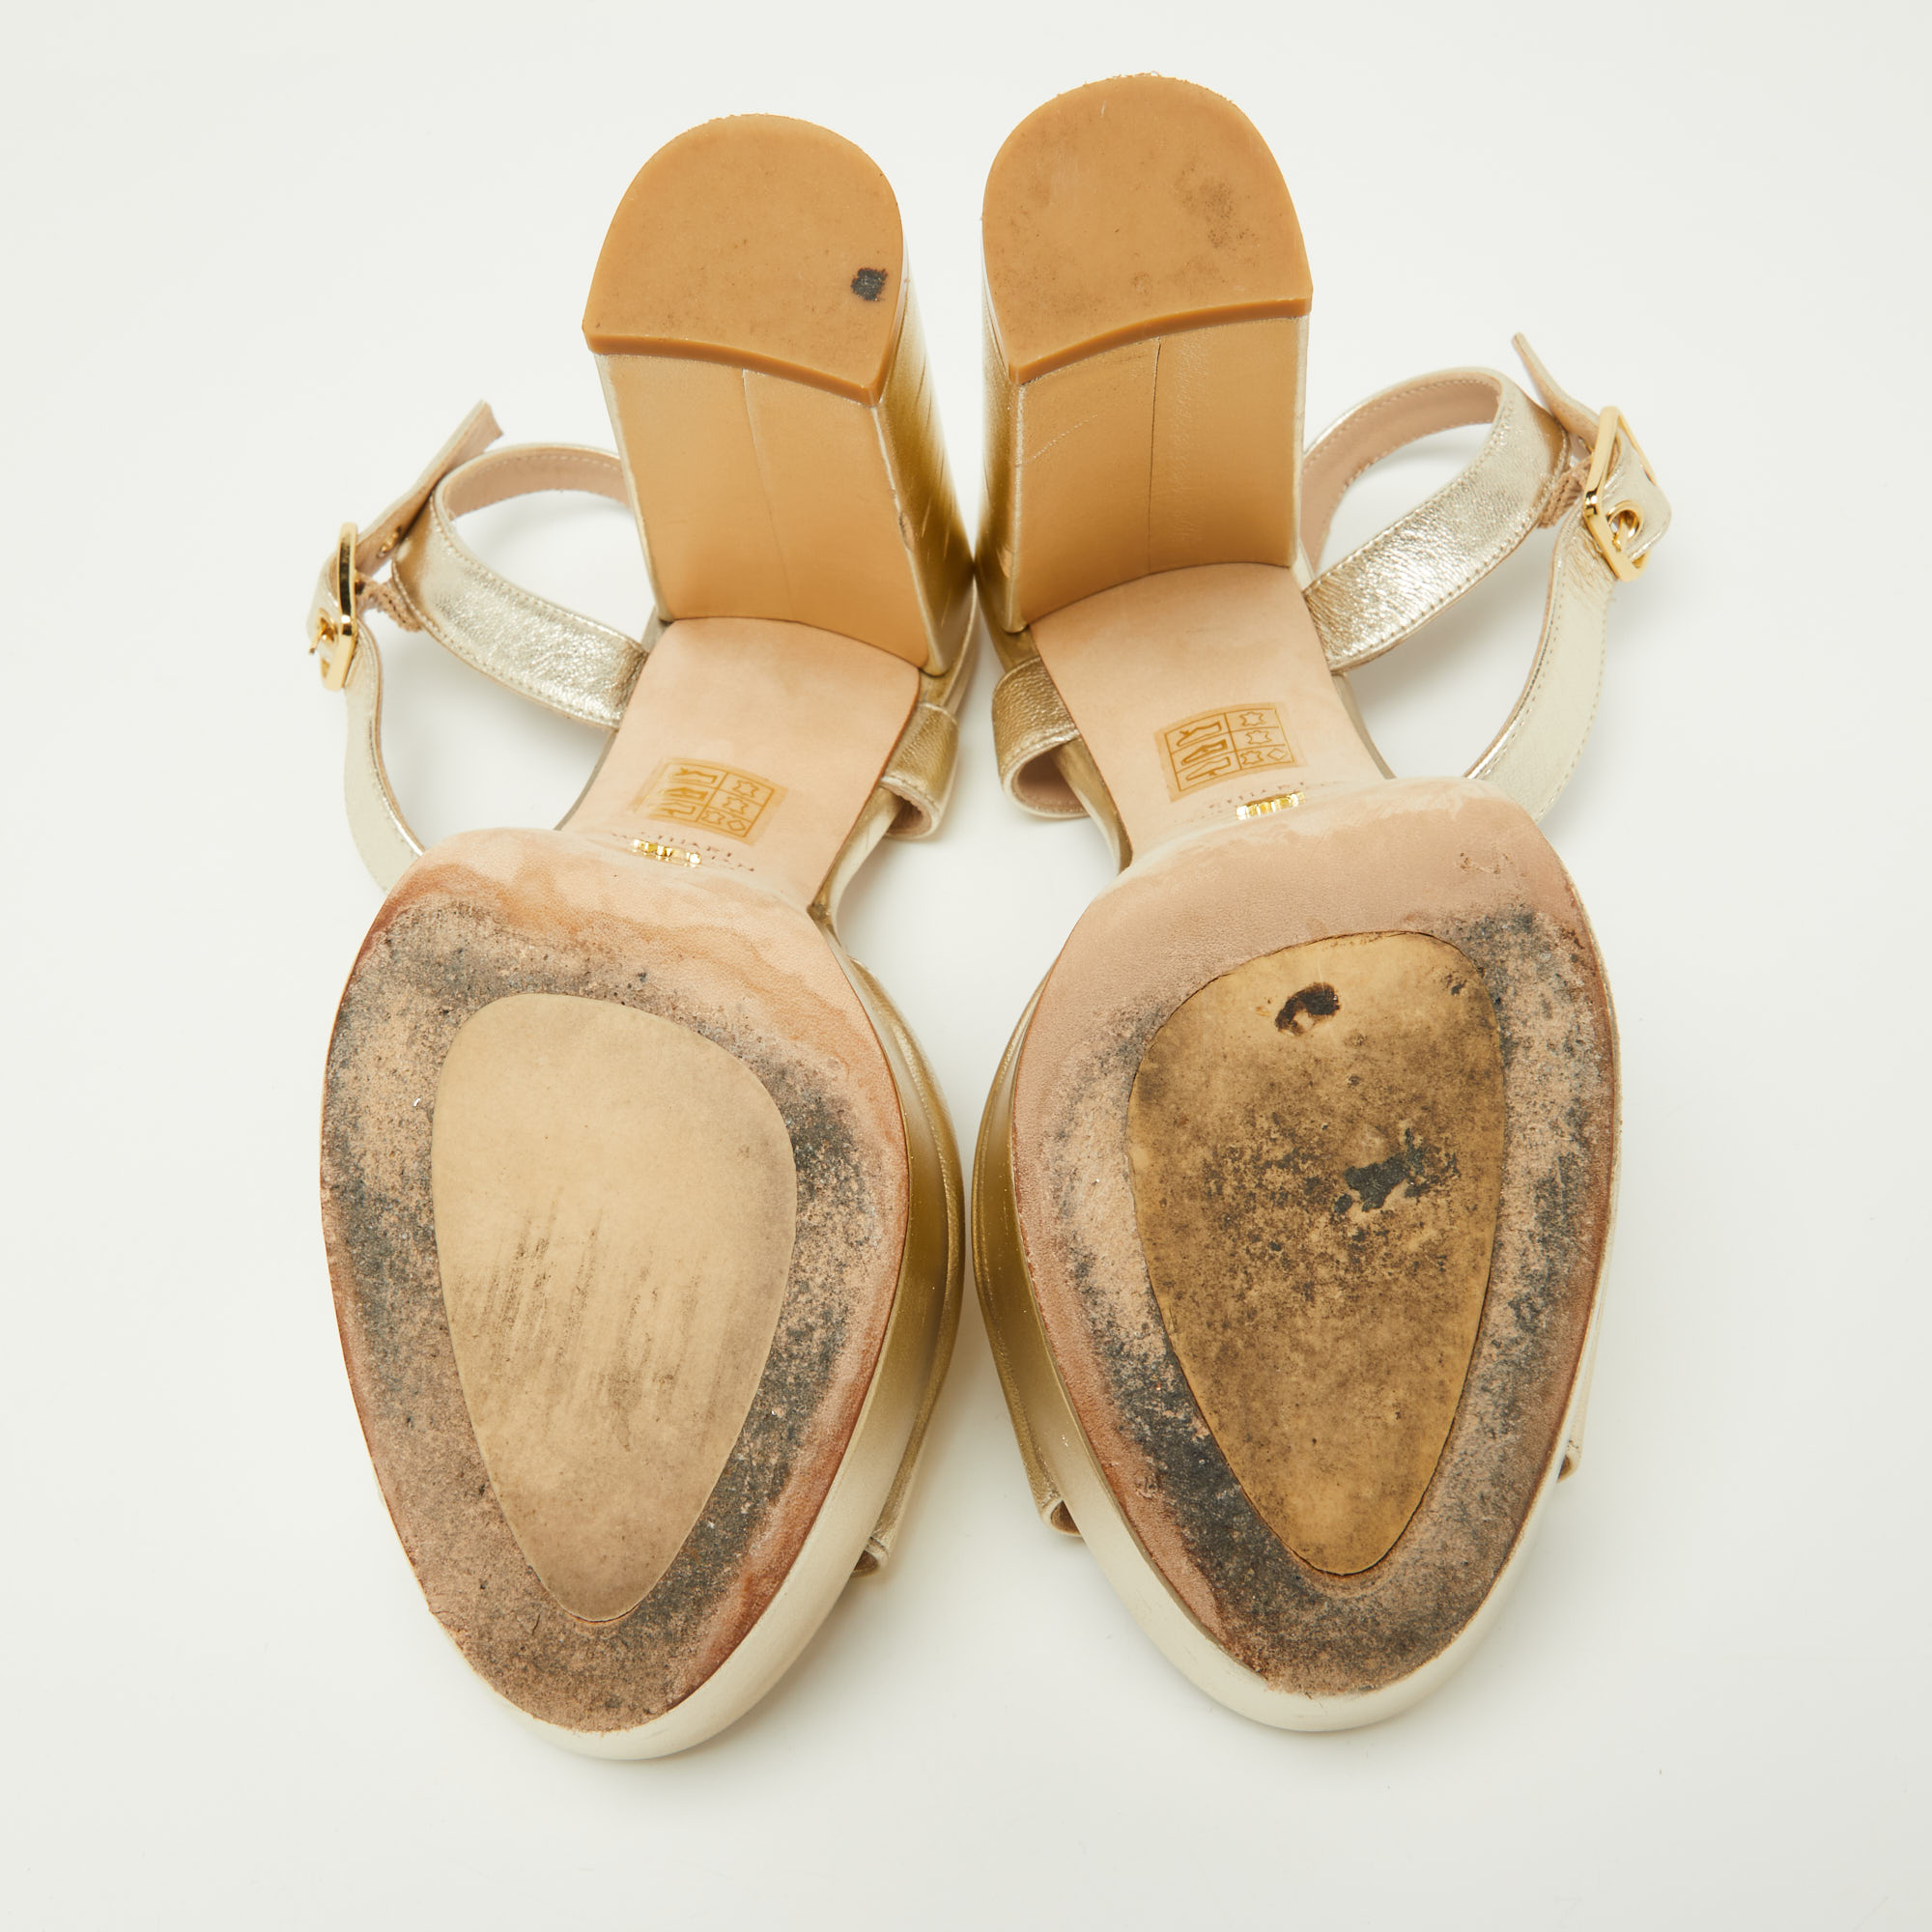 Stuart Weitzman Gold Leather Ankle Strap Platform Sandals Size 36.5